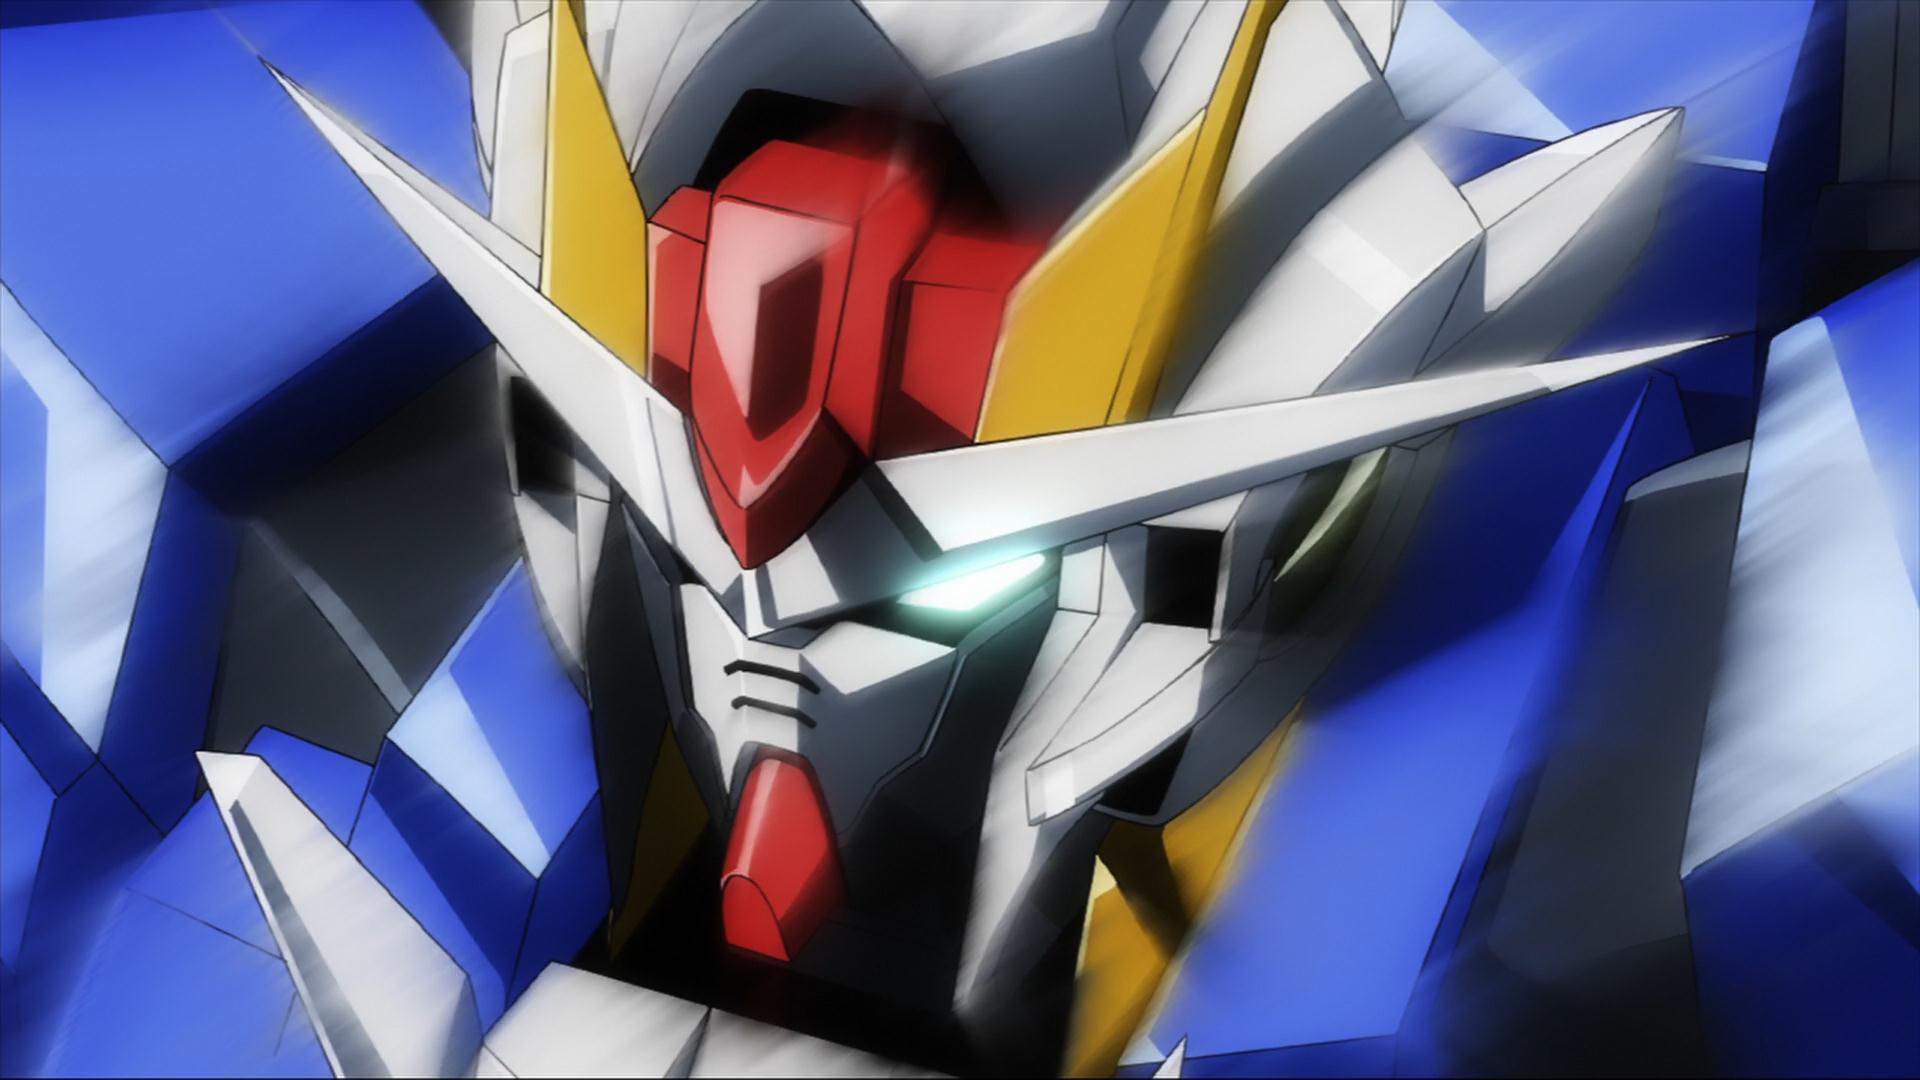 Anime 1920x1080 anime Anime screenshot Super Robot Taisen mechs Gundam Mobile Suit Gundam 00 00 Raiser artwork digital art